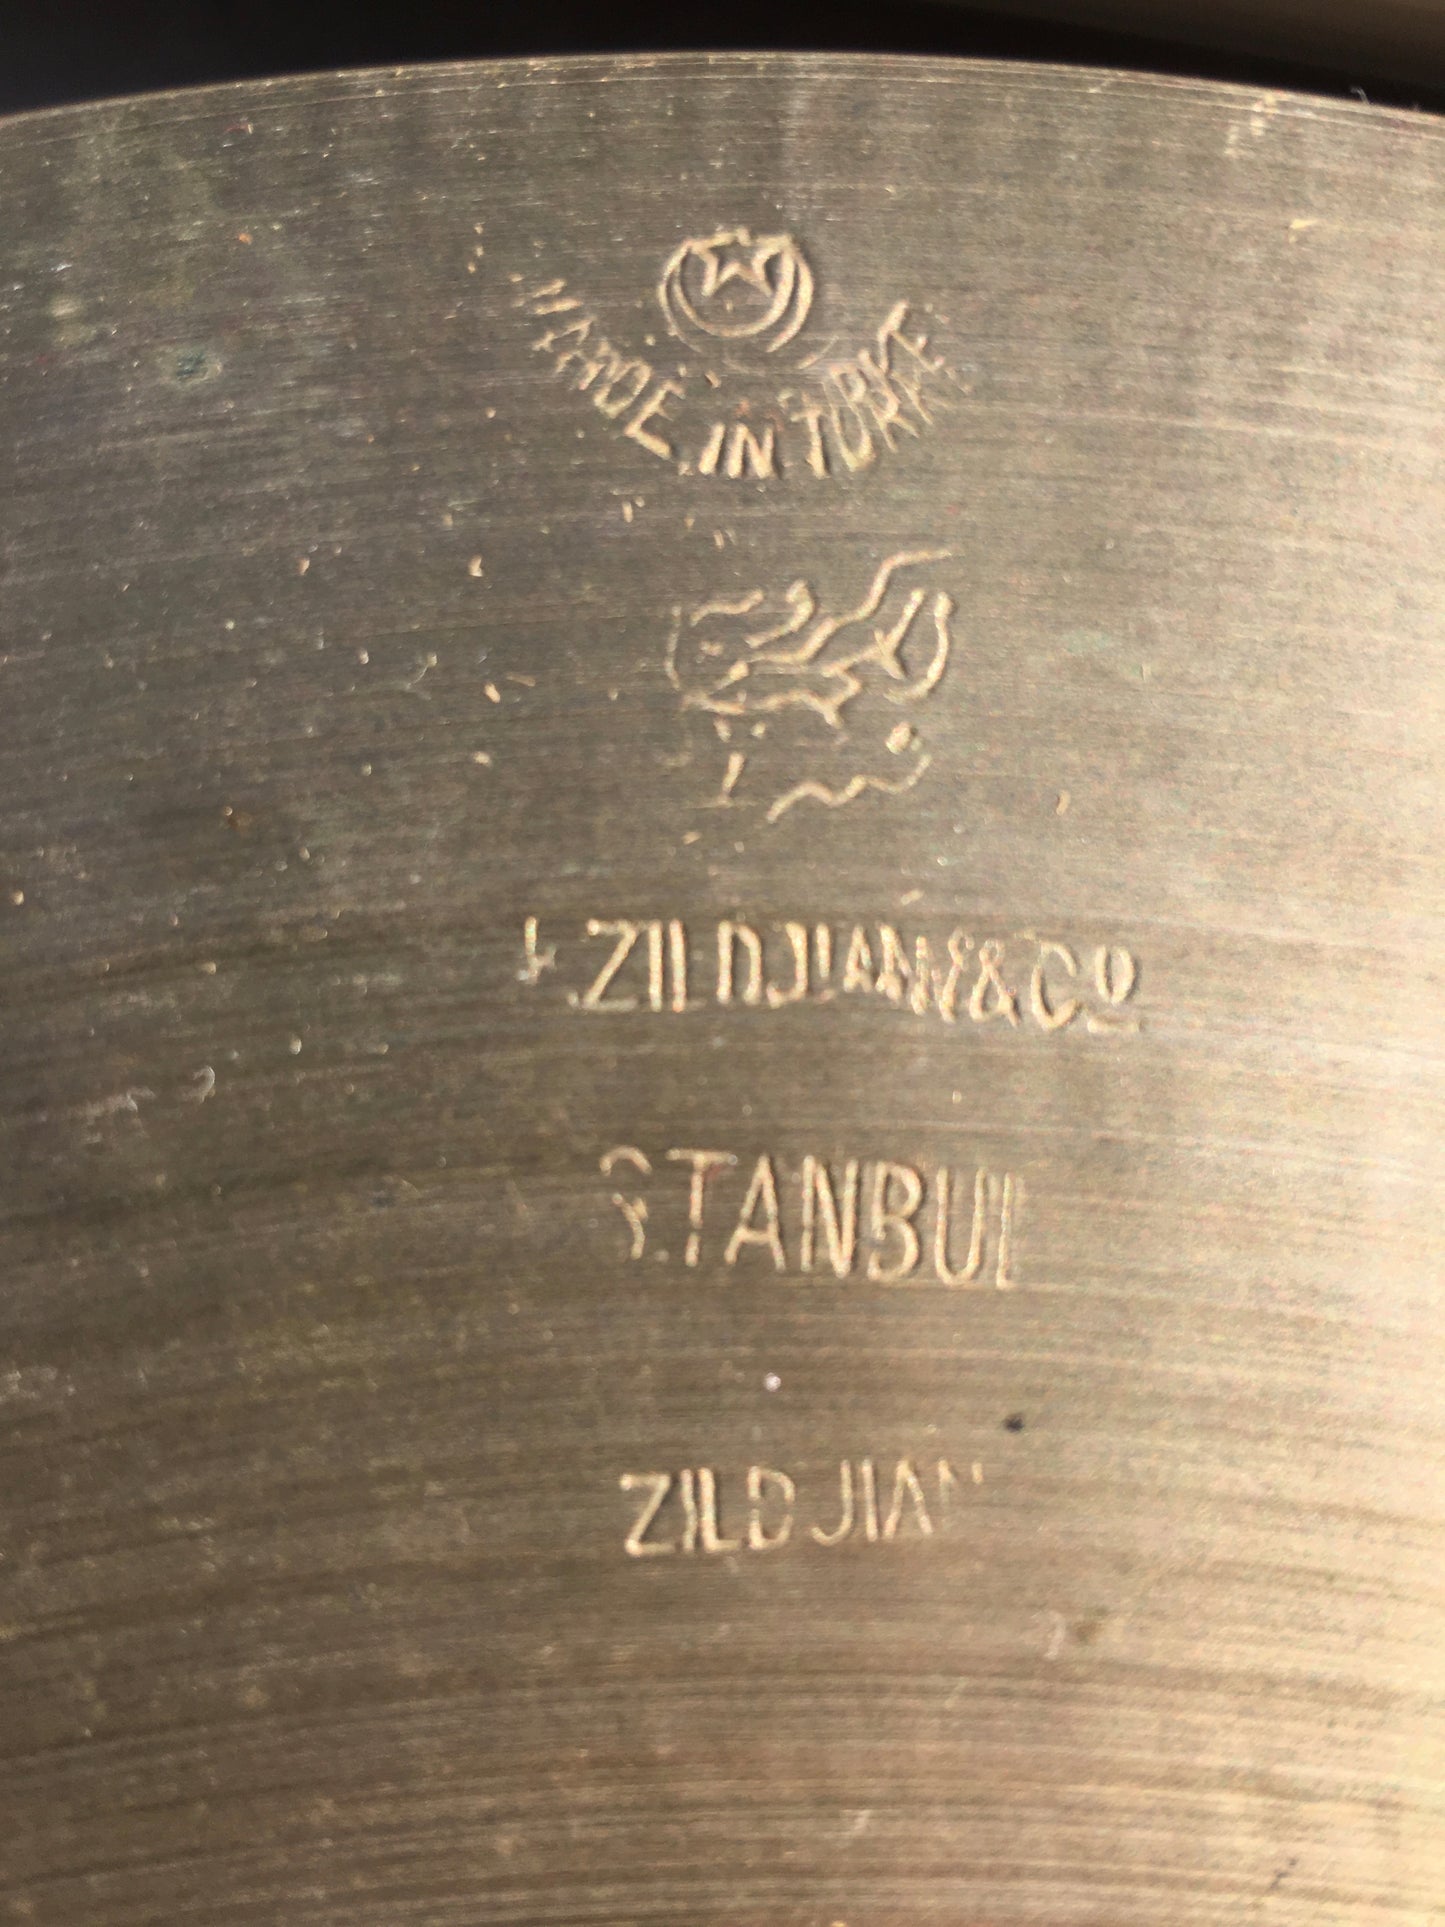 13" K Zildjian Istanbul Old Stamp II 1945-49 Hi-Hat Cymbals 562/628g #1051